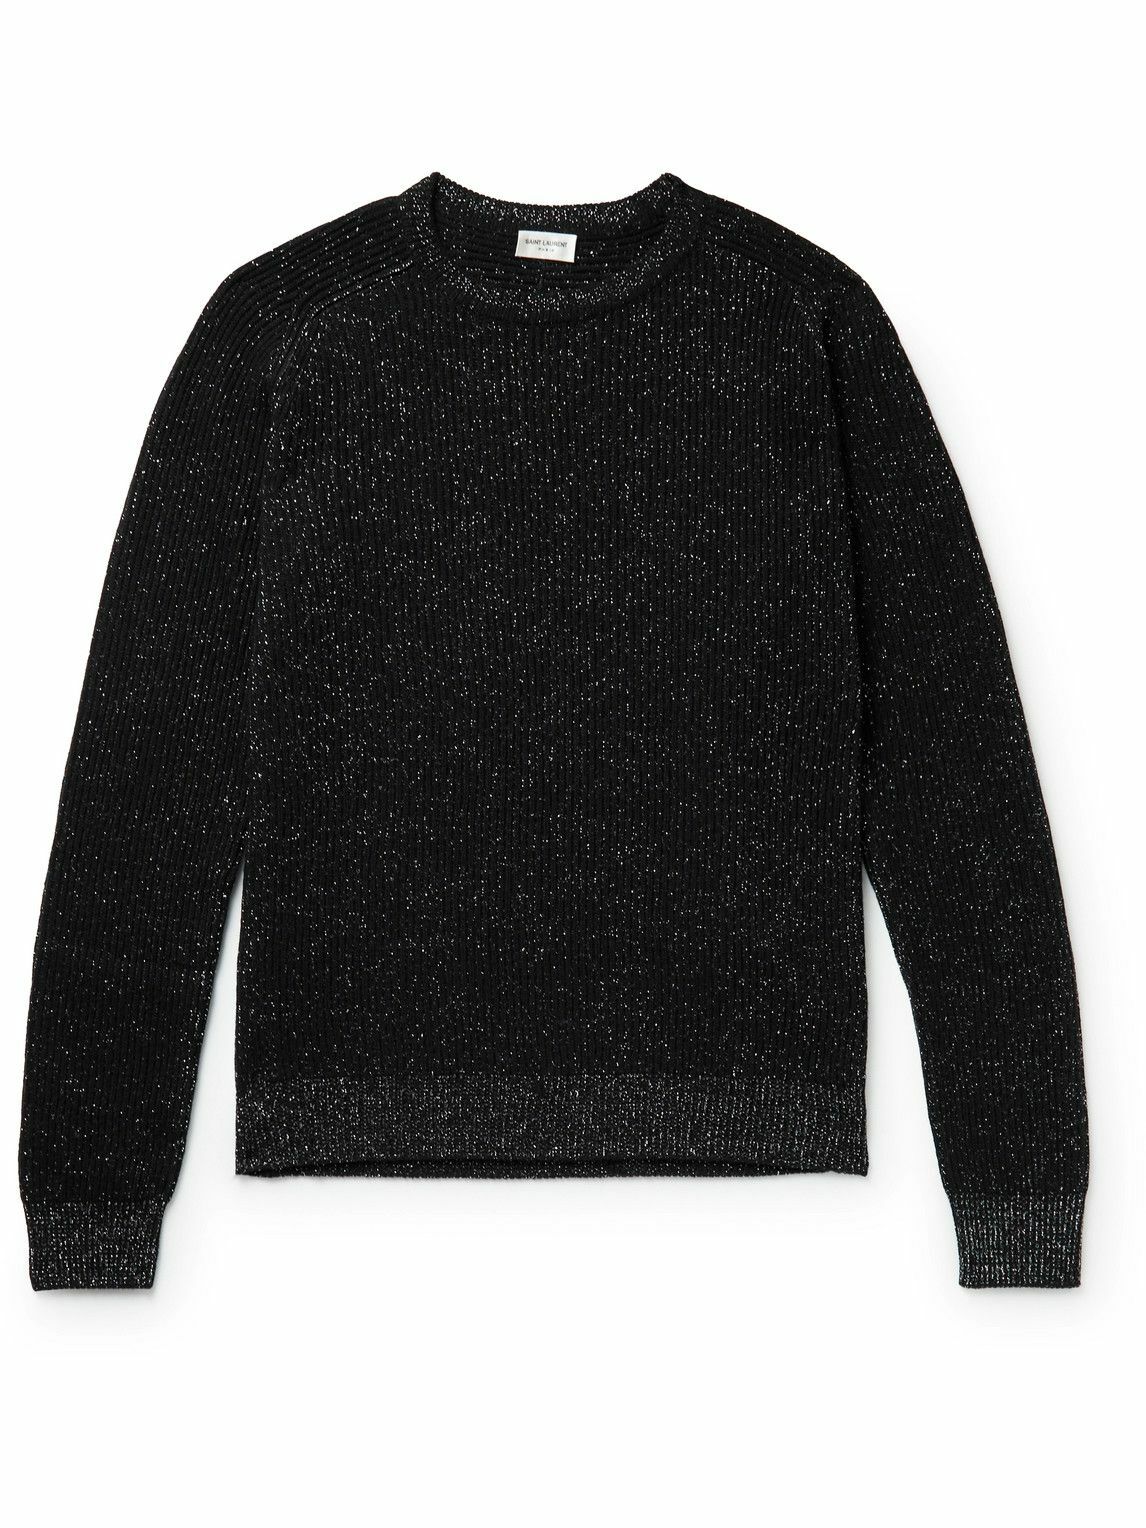 Photo: SAINT LAURENT - Metallic Wool-Blend Sweater - Black